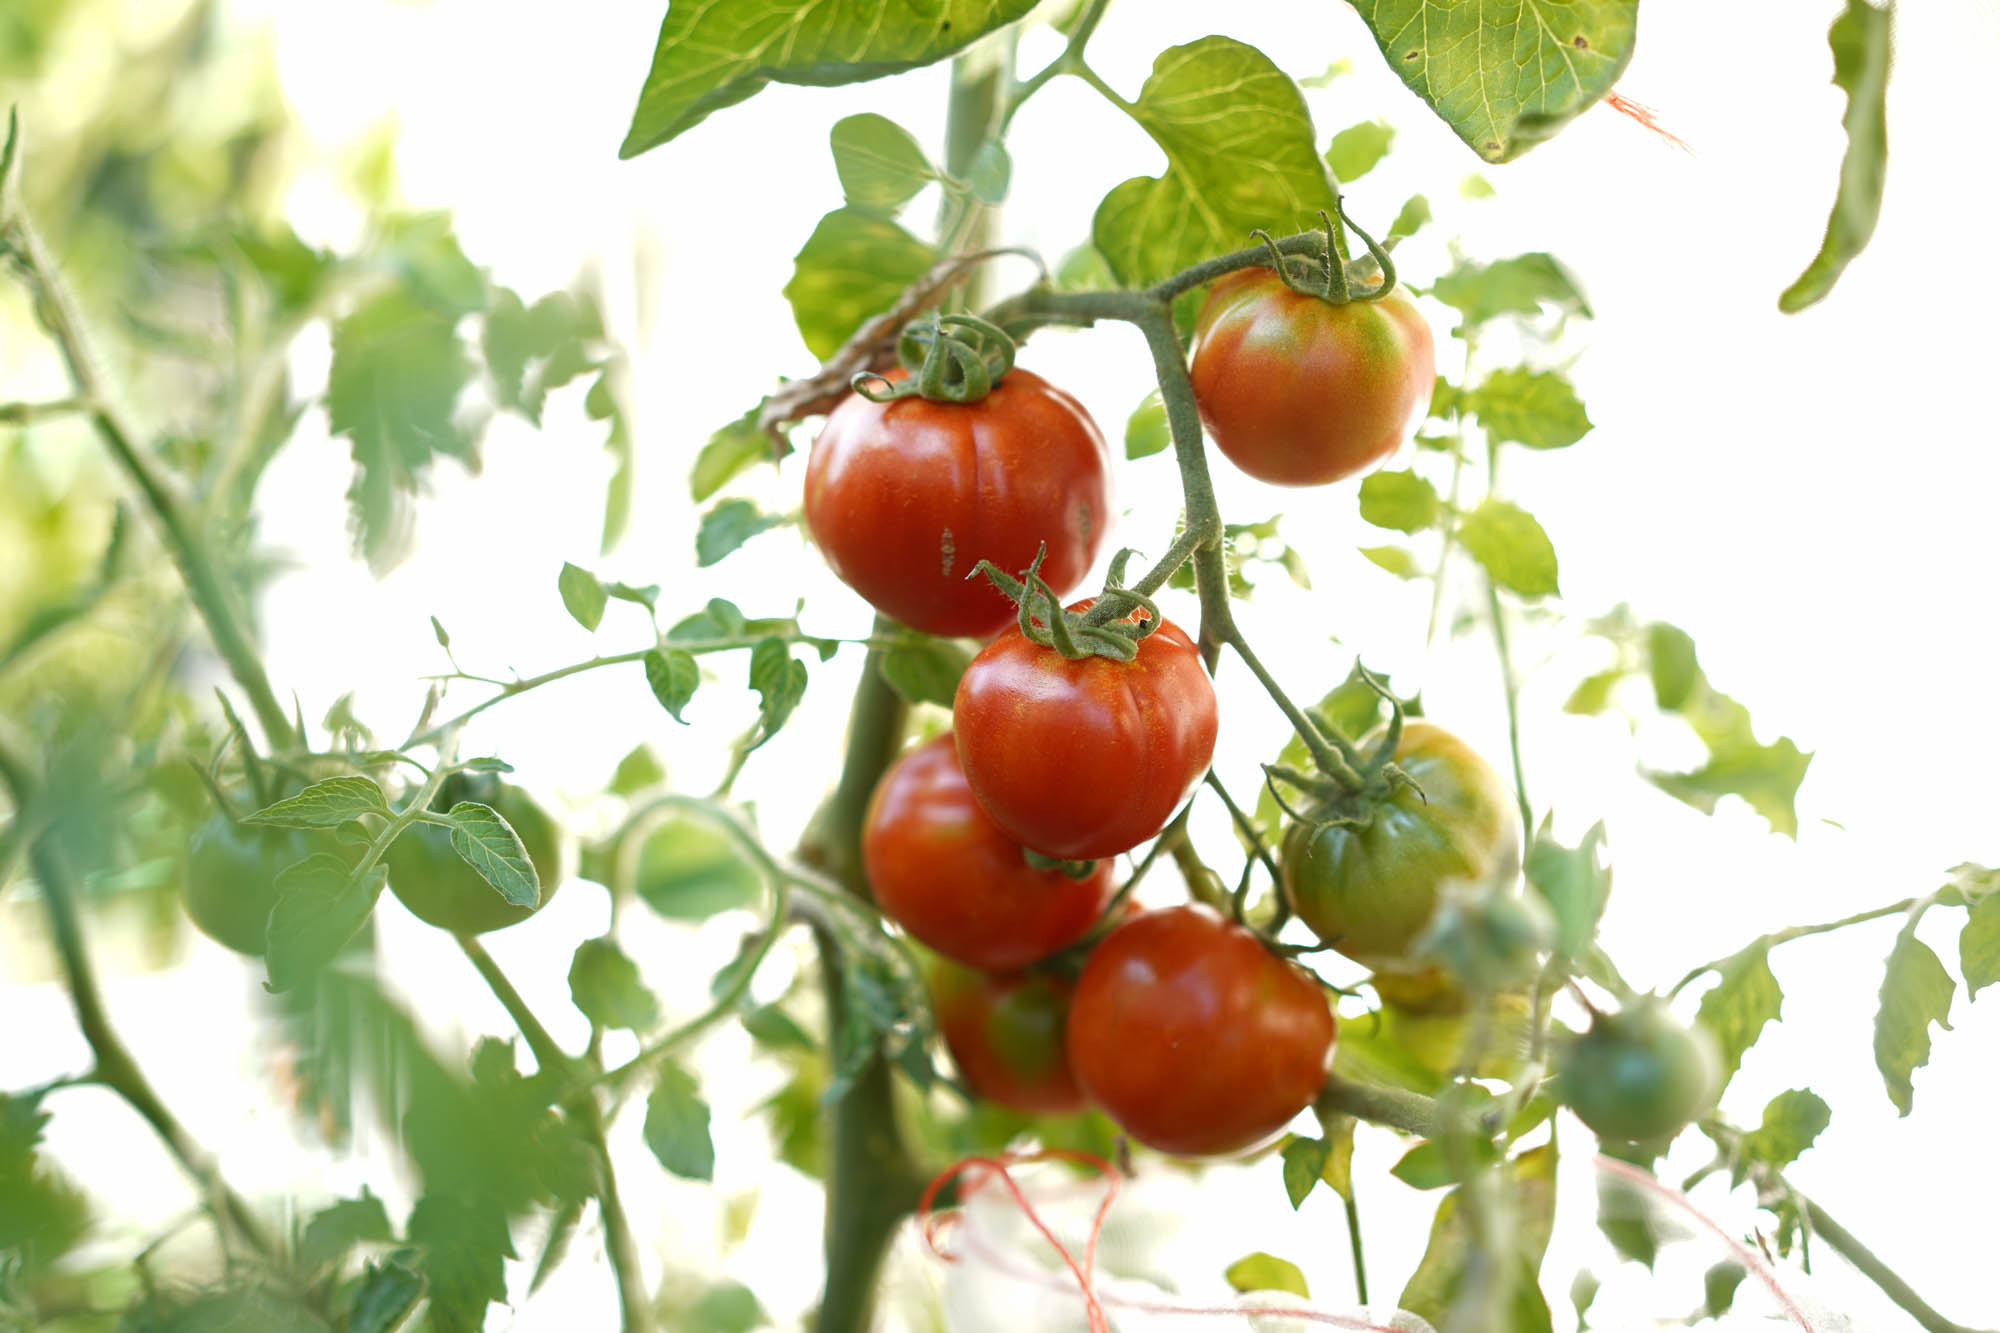 https://www.hungryhuy.com/wp-content/uploads/ripe-tomatoes-on-vine.jpg